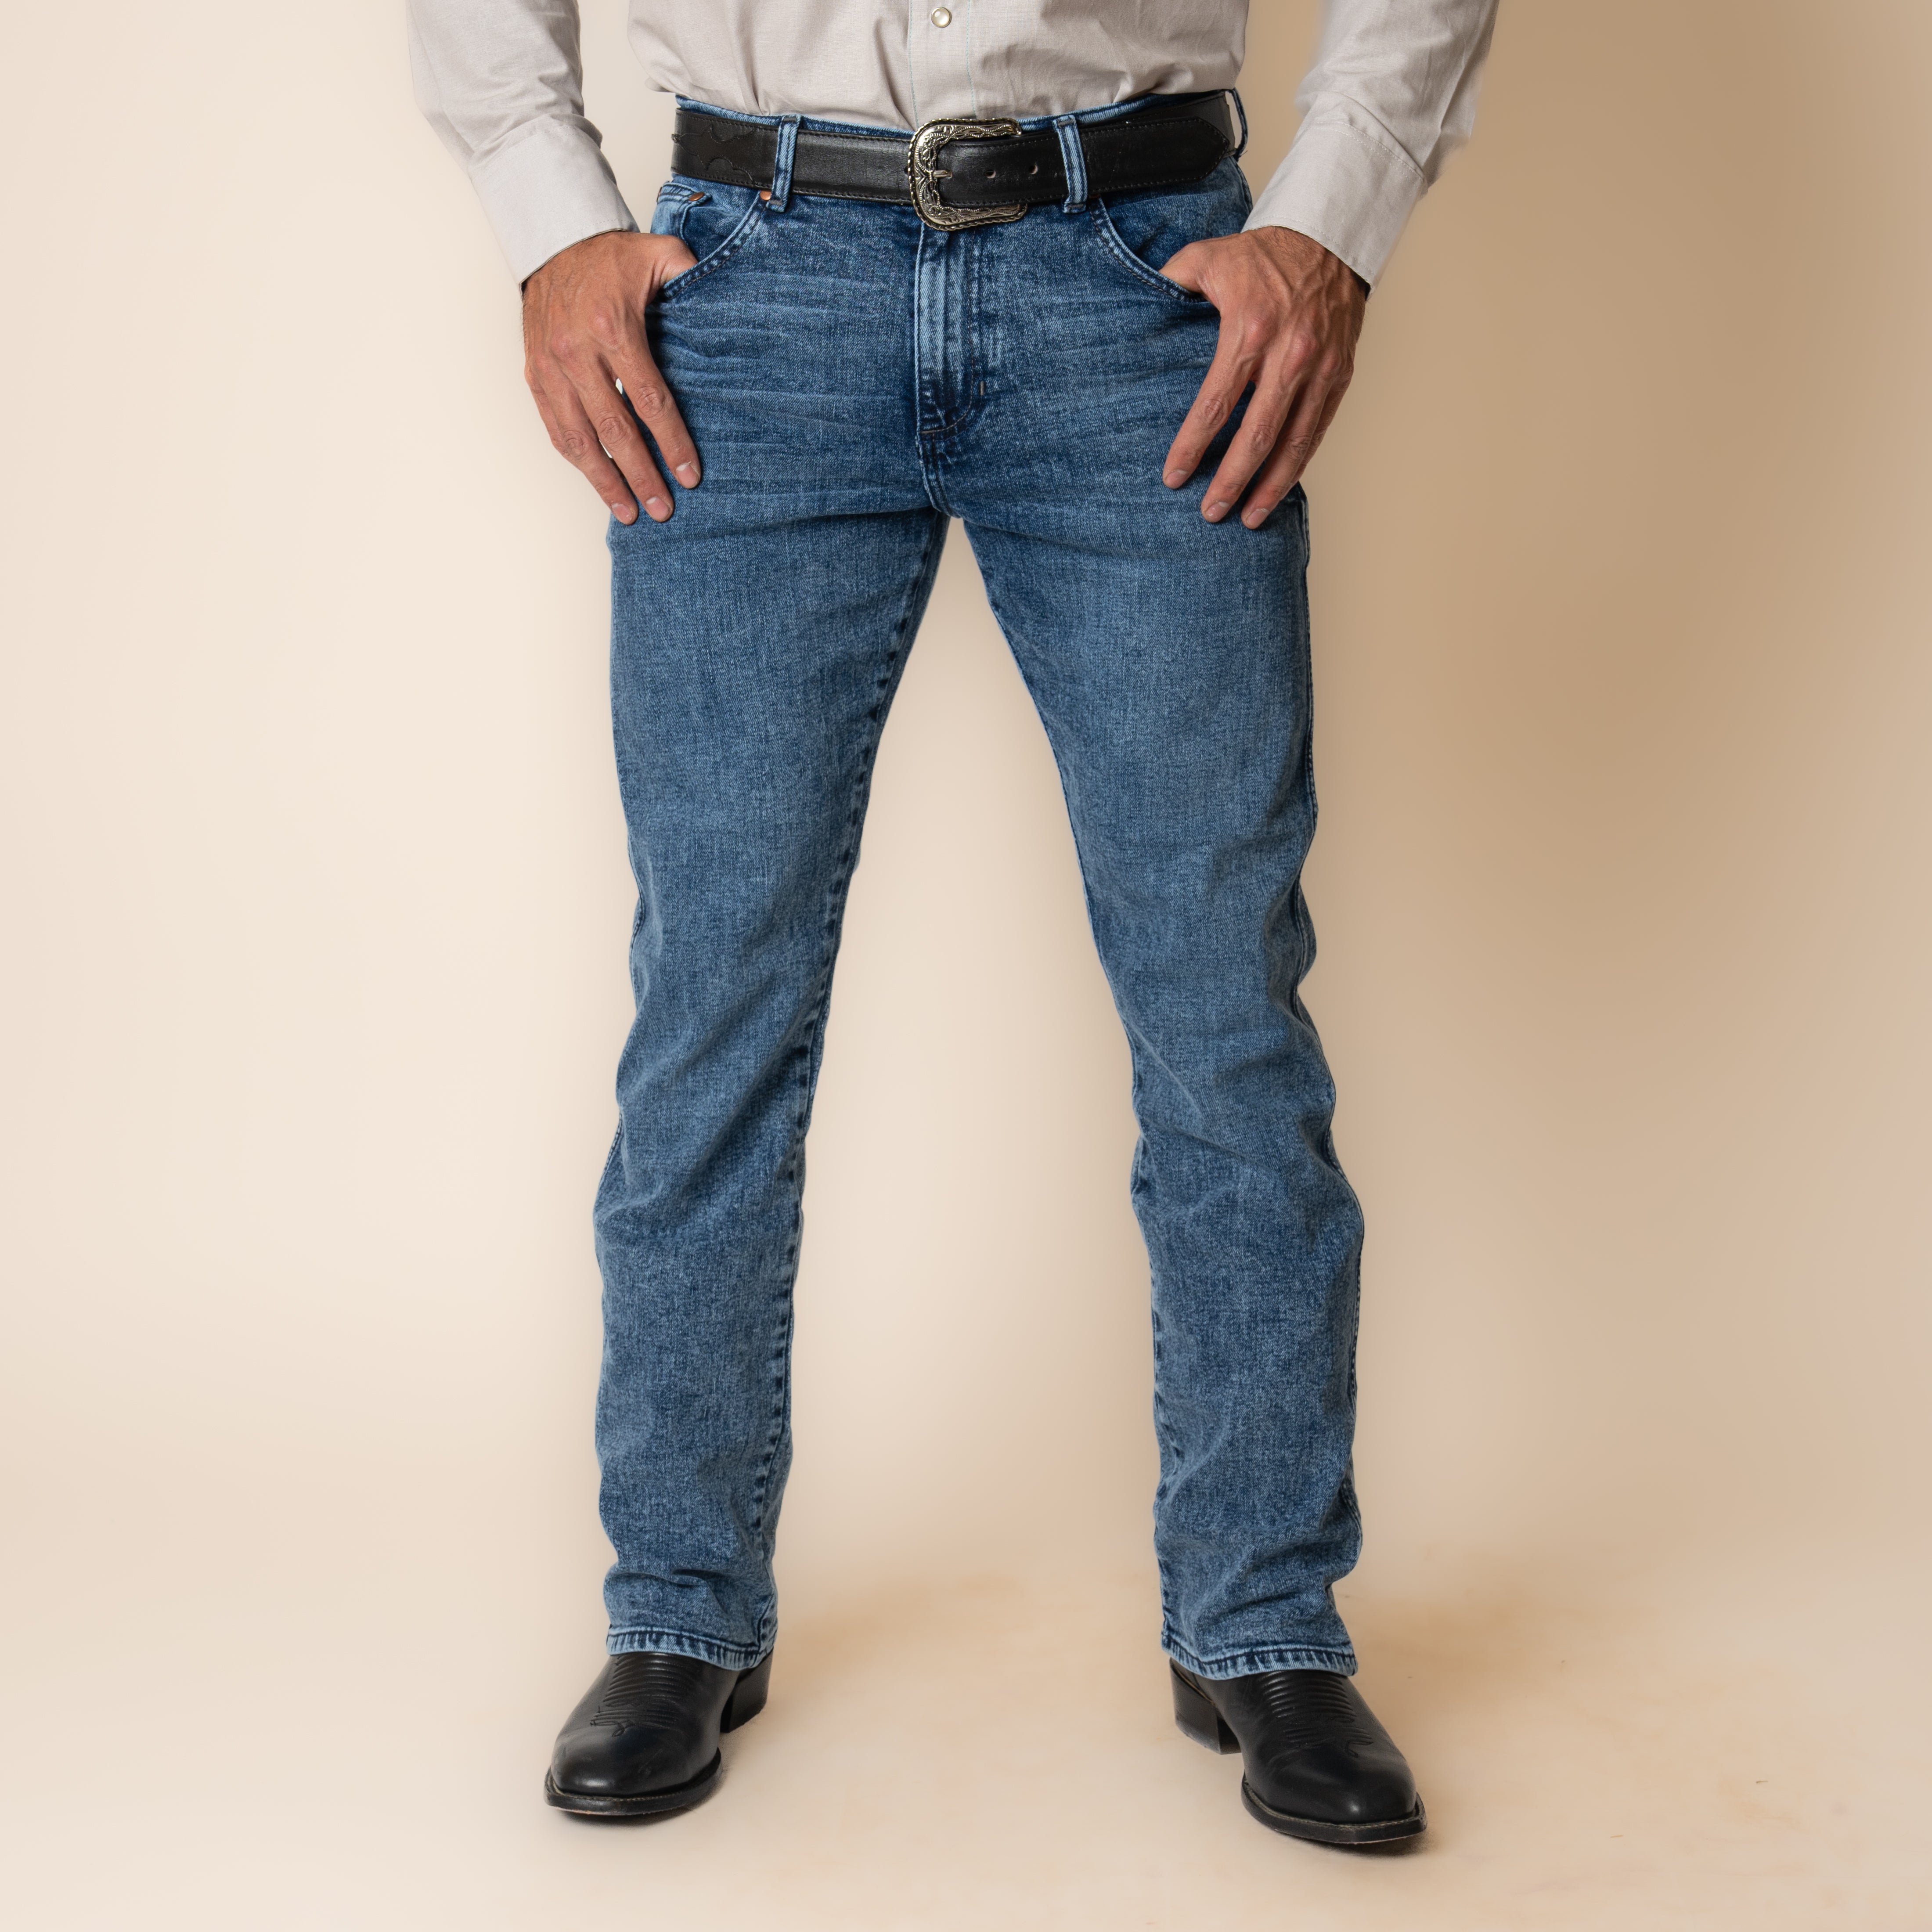 Jeans Wrangler Retro Slim Boot Caballero